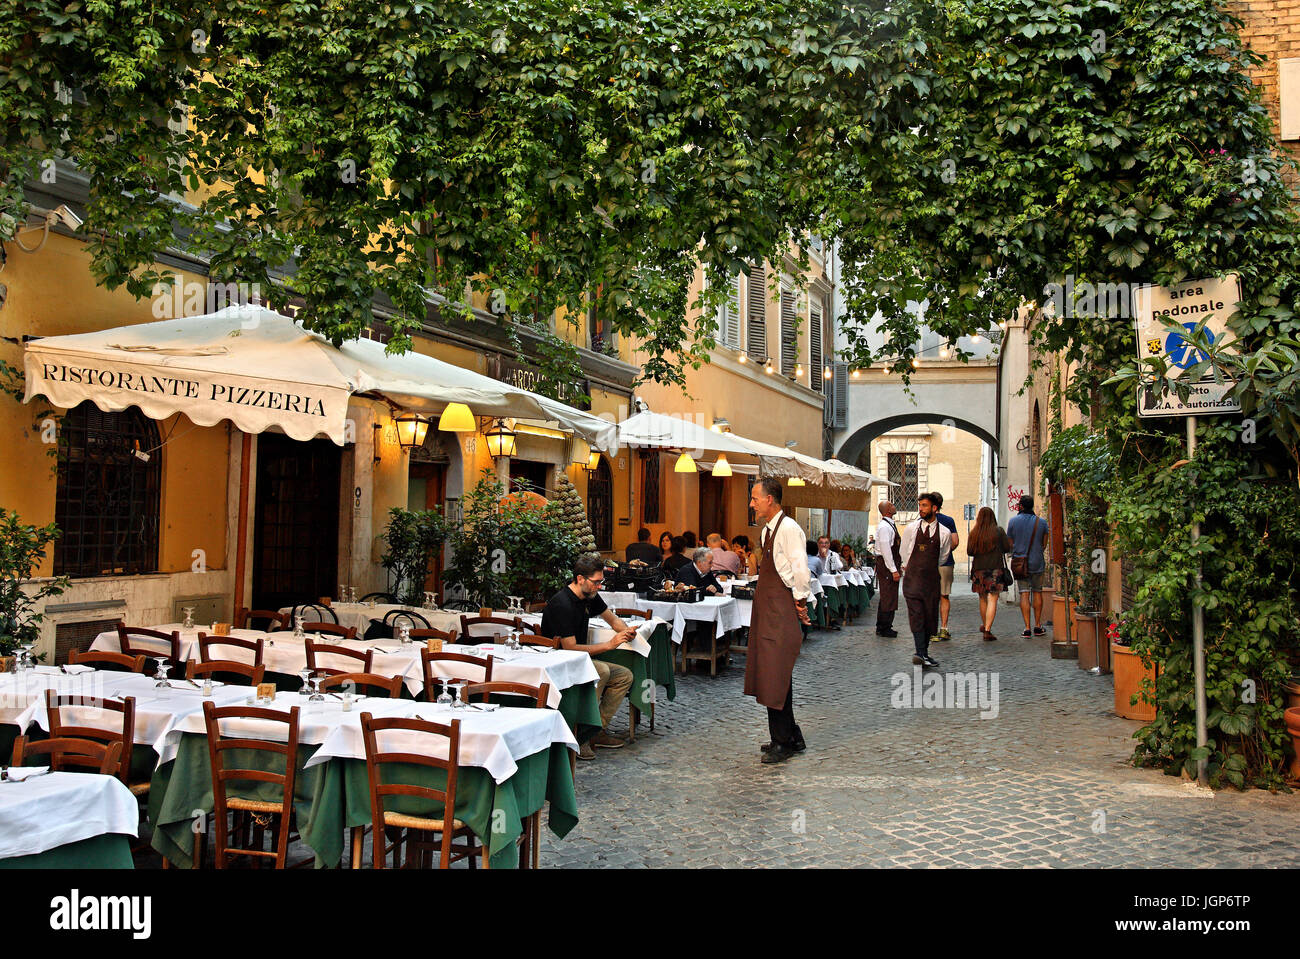 Restaurant - Pizzeria in Trastevere, Rome, Italy Stock Photo